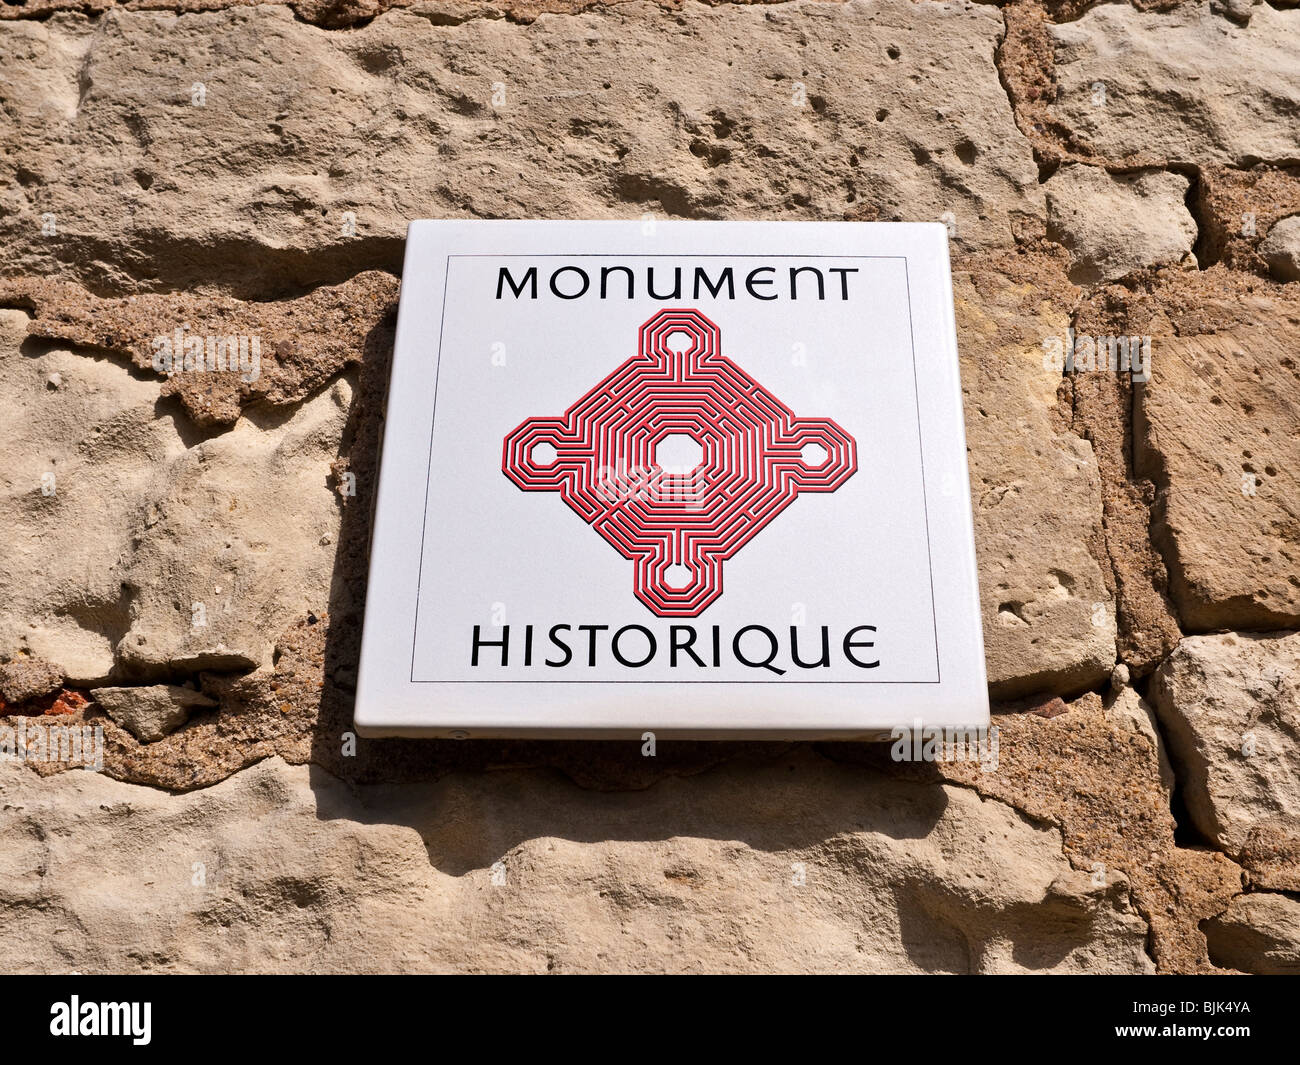 Monument Historique - Historic Monument sign - France. Stock Photo